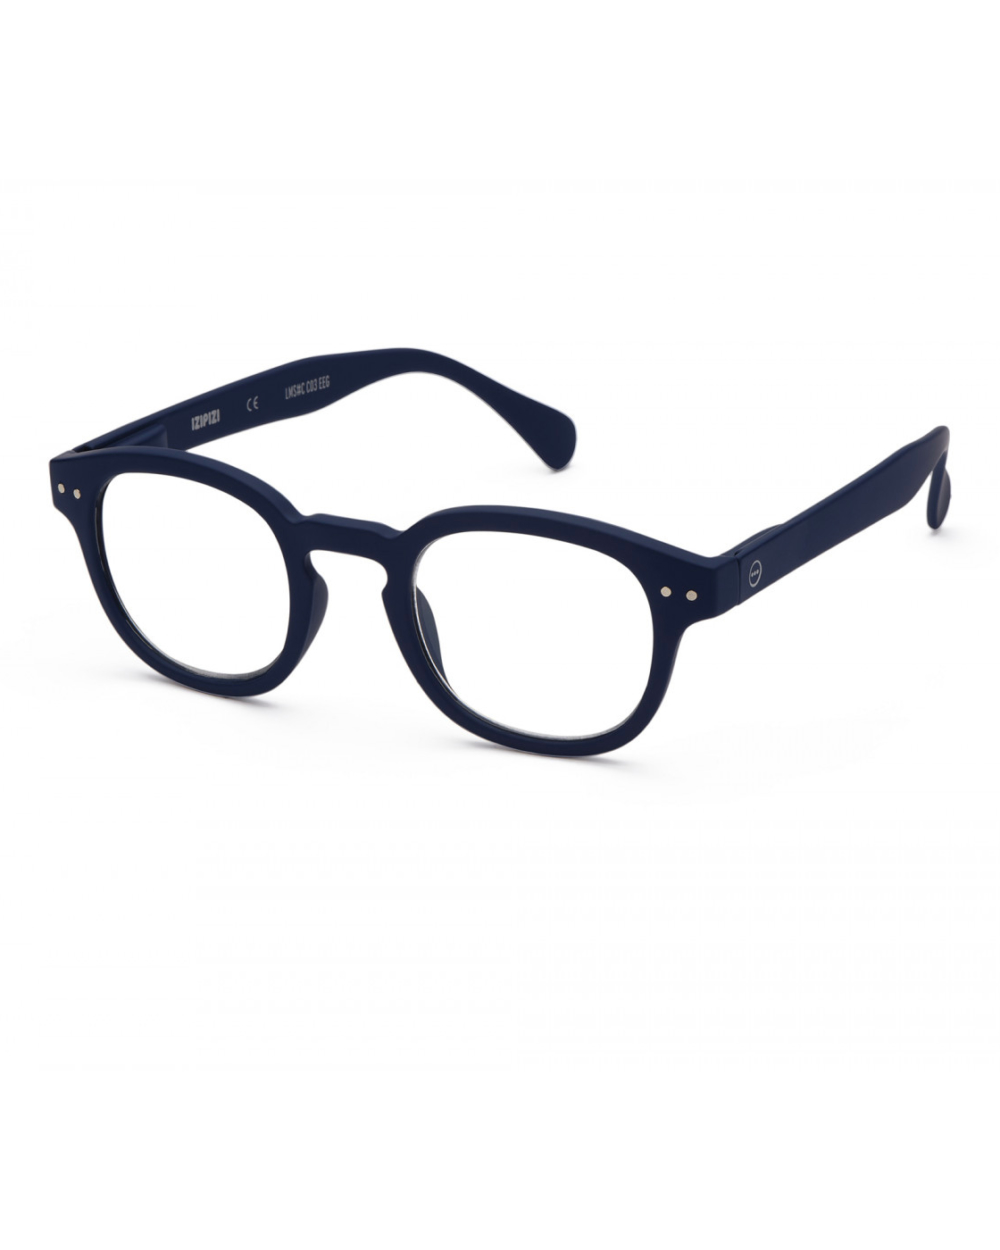 Navy Blue Fashion Reading Glasses - Cad-eau Online